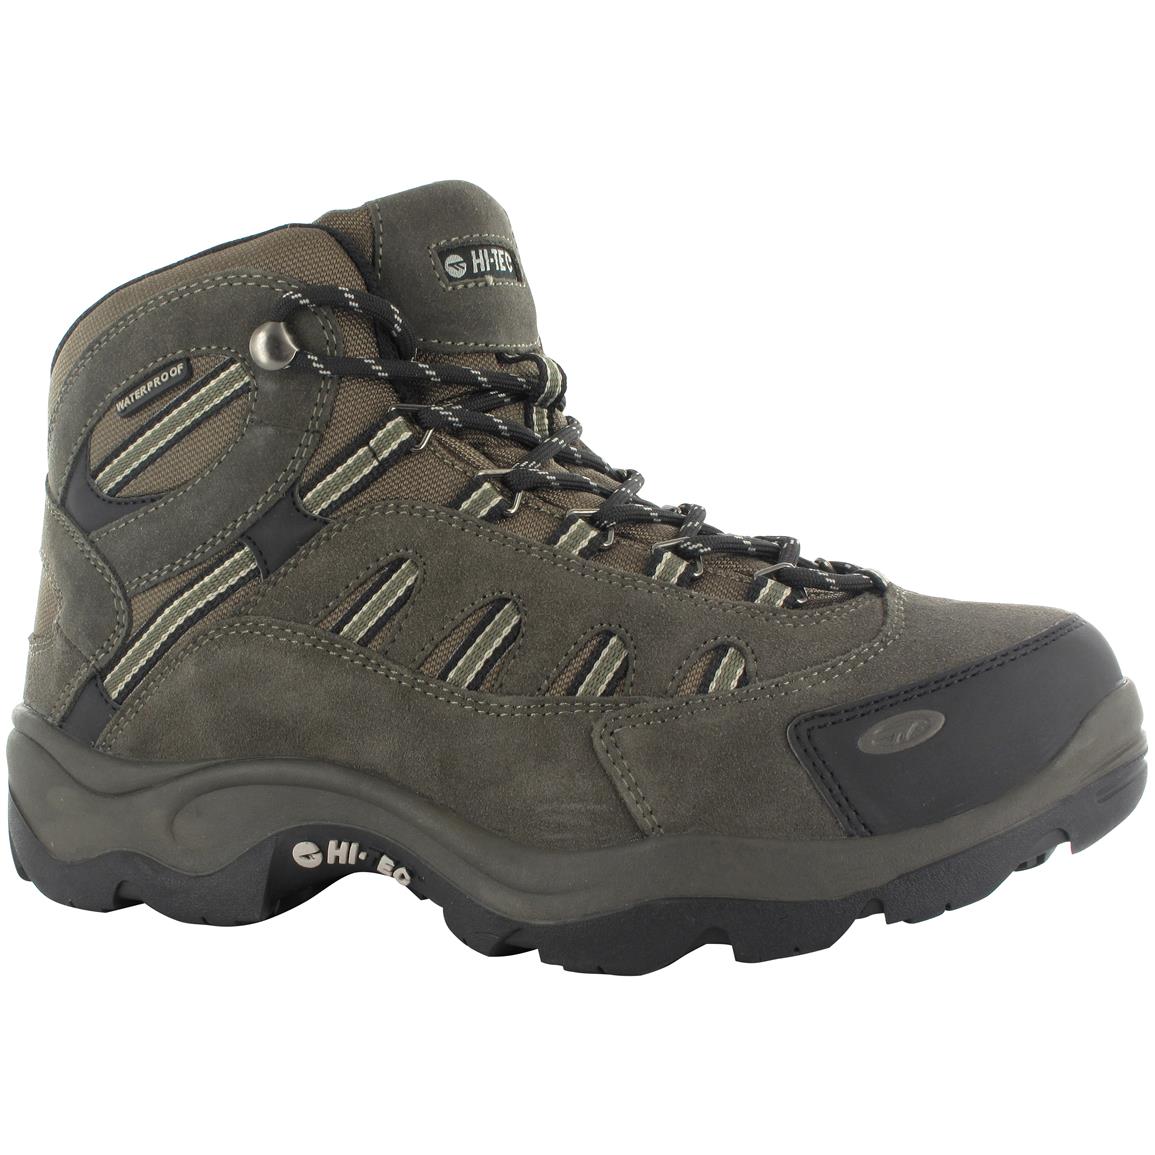 Hi-Tec Bandera Men's Mid Hiking Boots, Waterproof - 665196, Hiking ...